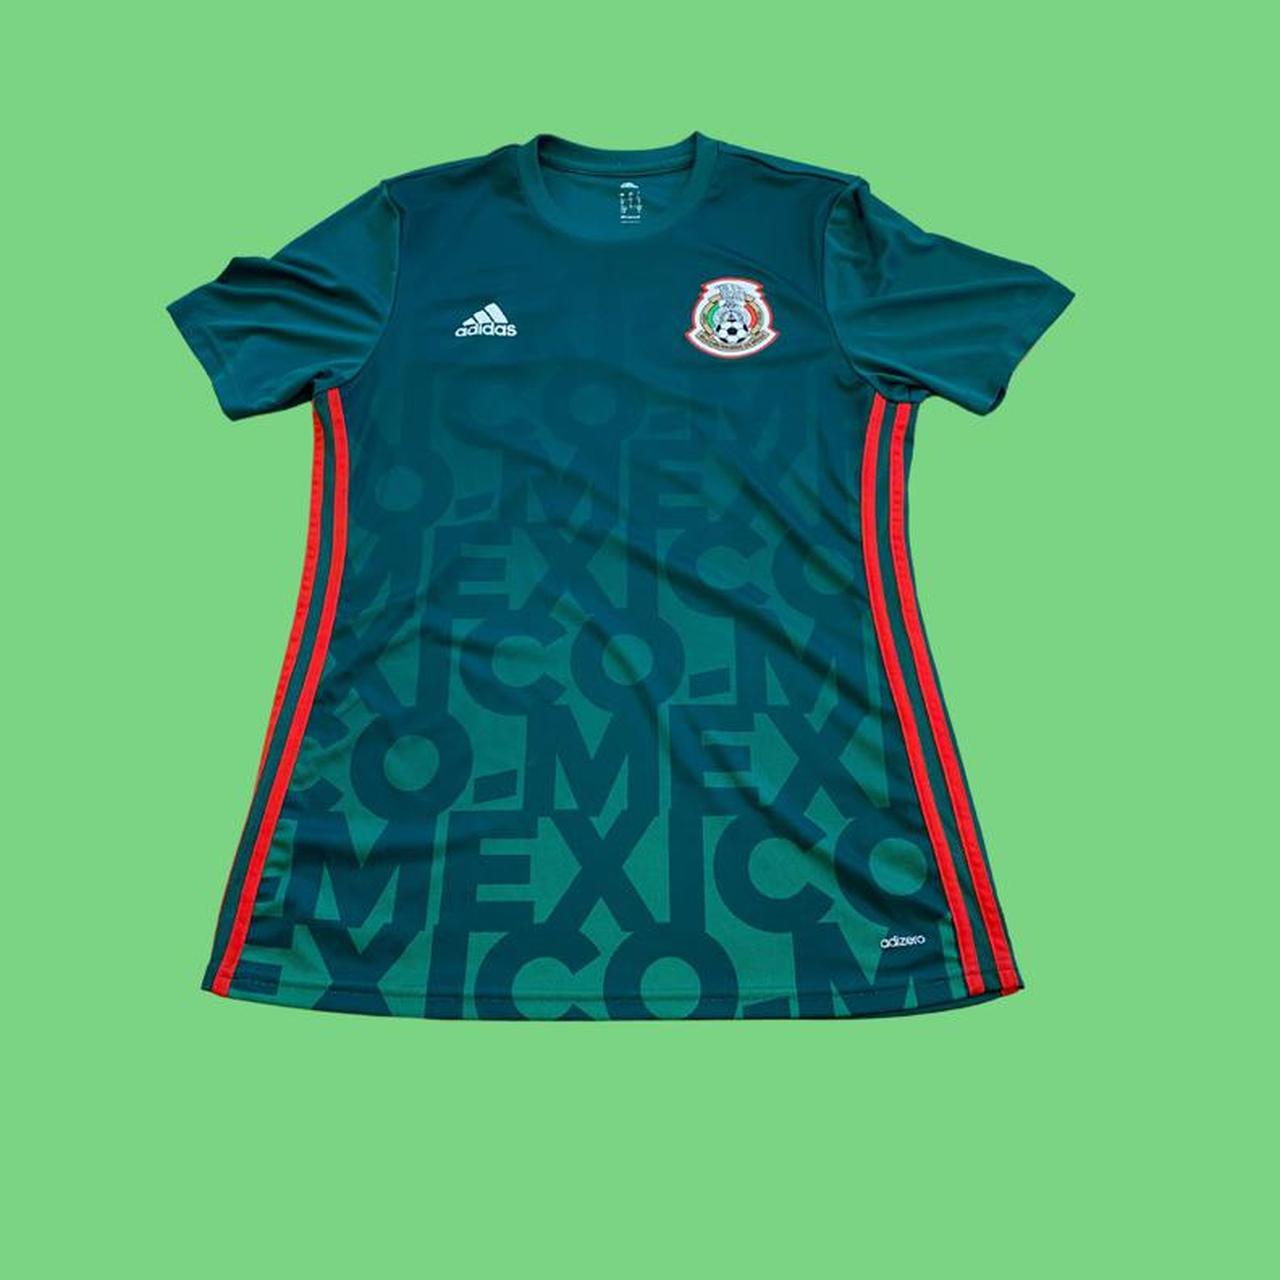 Product Image 1 - Modern Mexico training football shirt